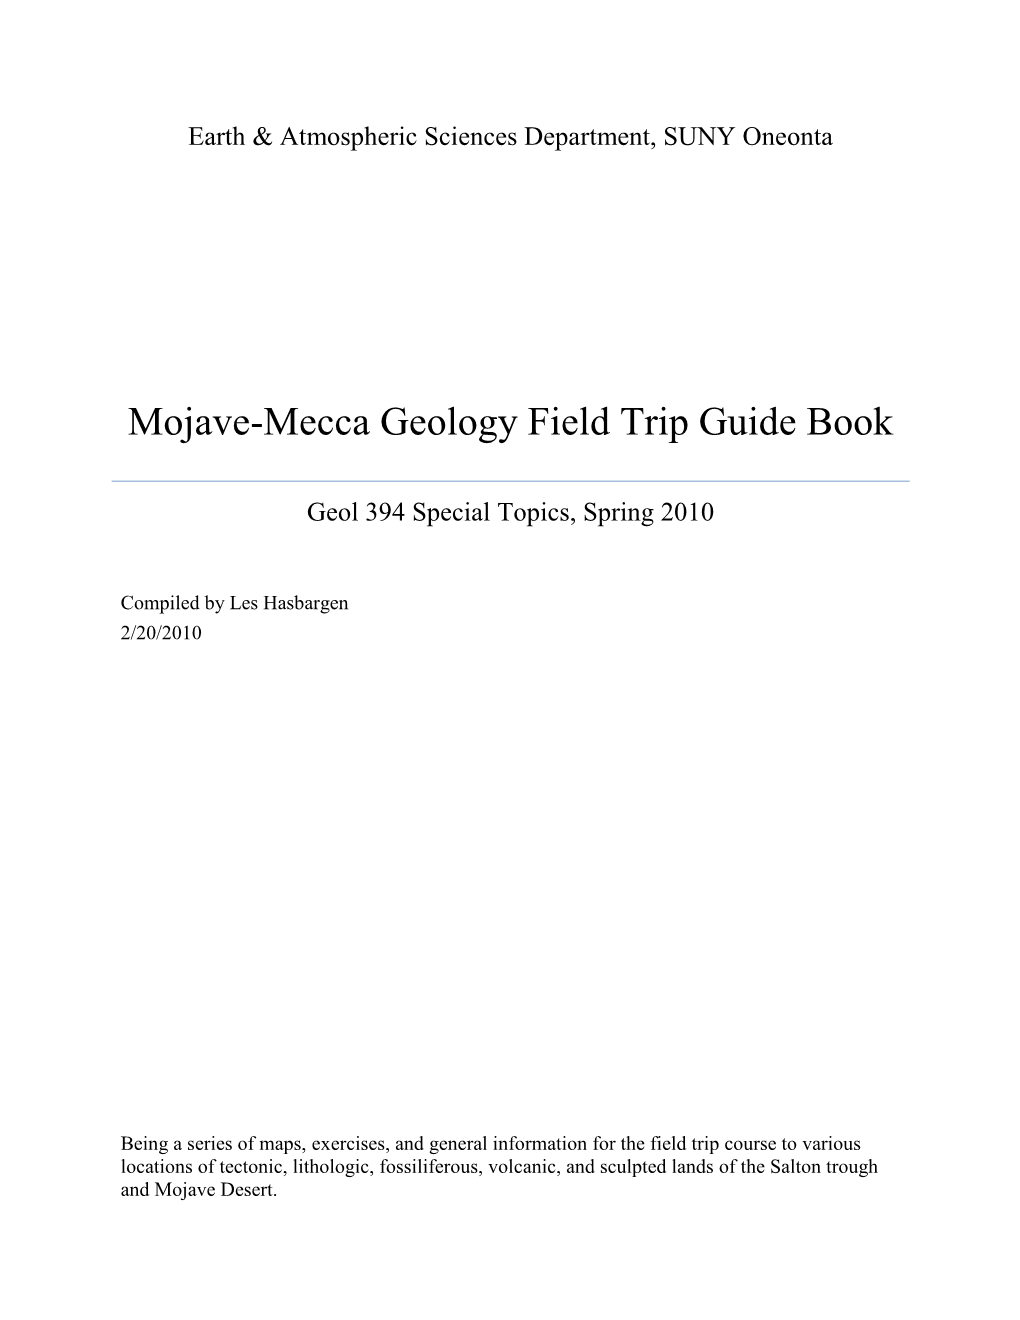 Mojave-Mecca Geology Field Trip Guide Book